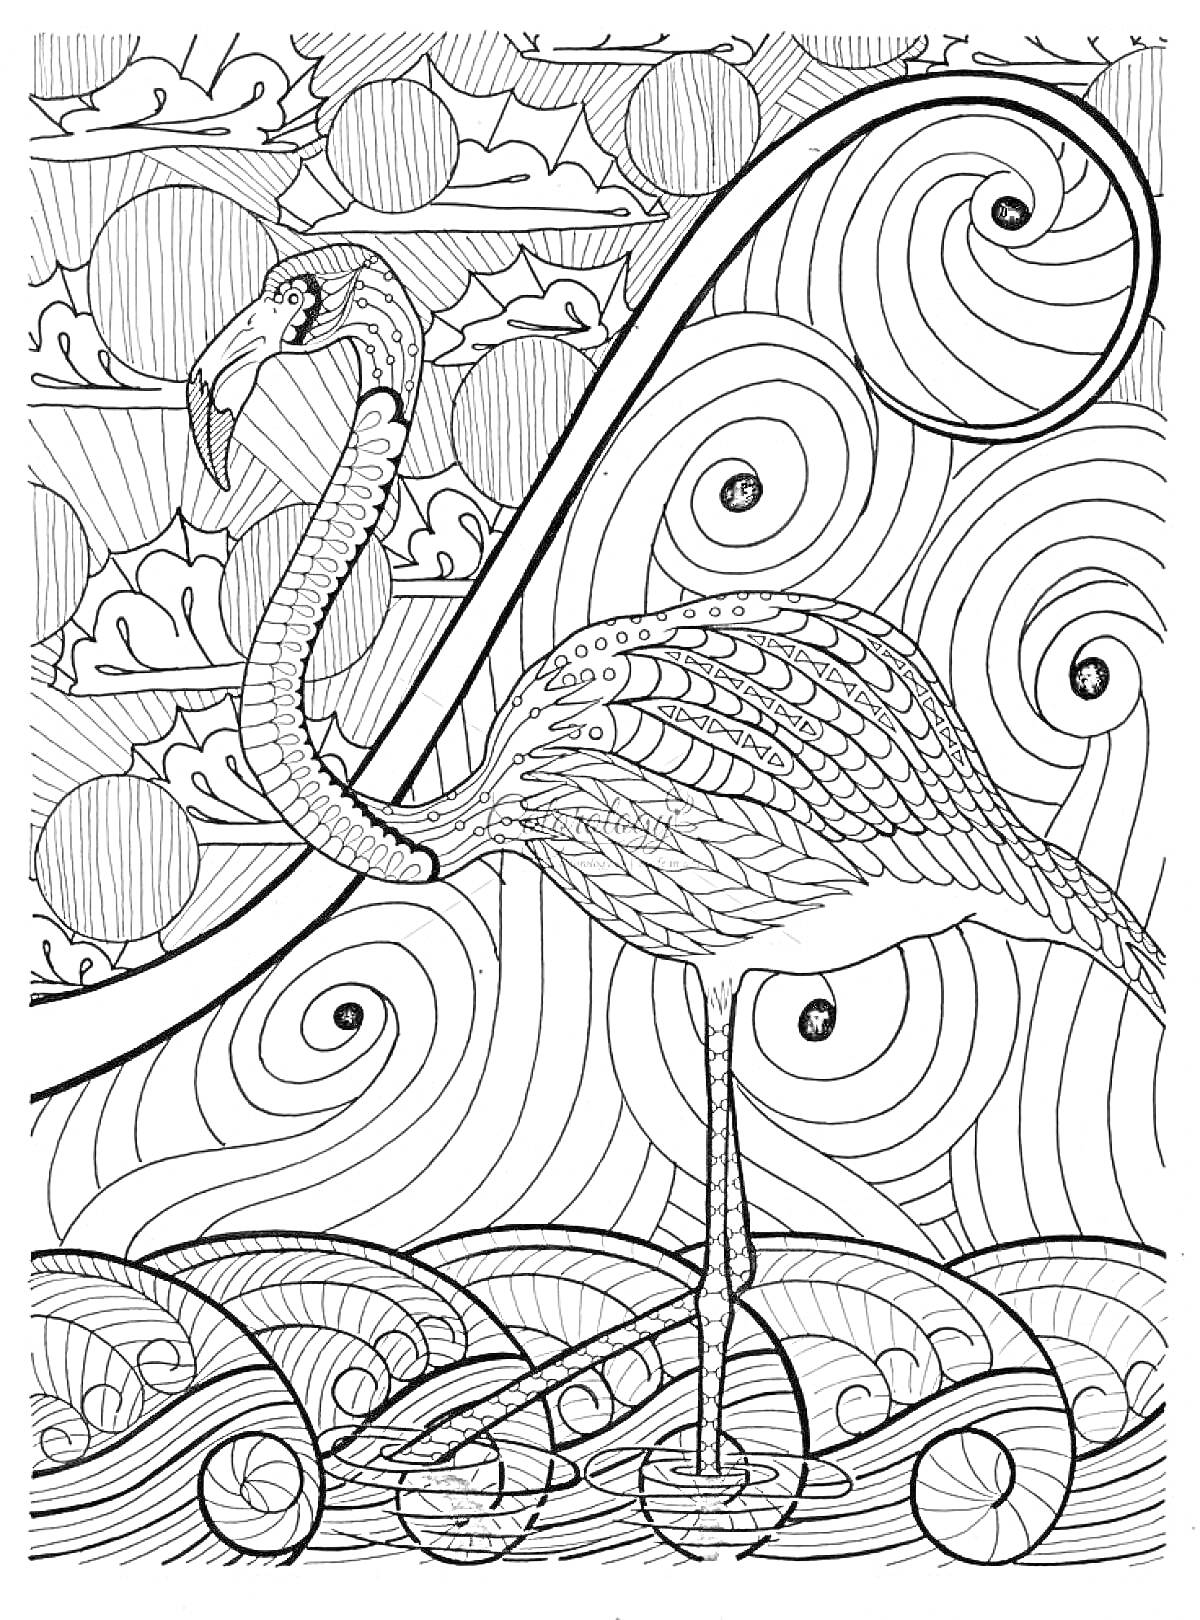 Раскраска Антистресс фламинго с узорами, кругами, волнистыми линиями и облаками